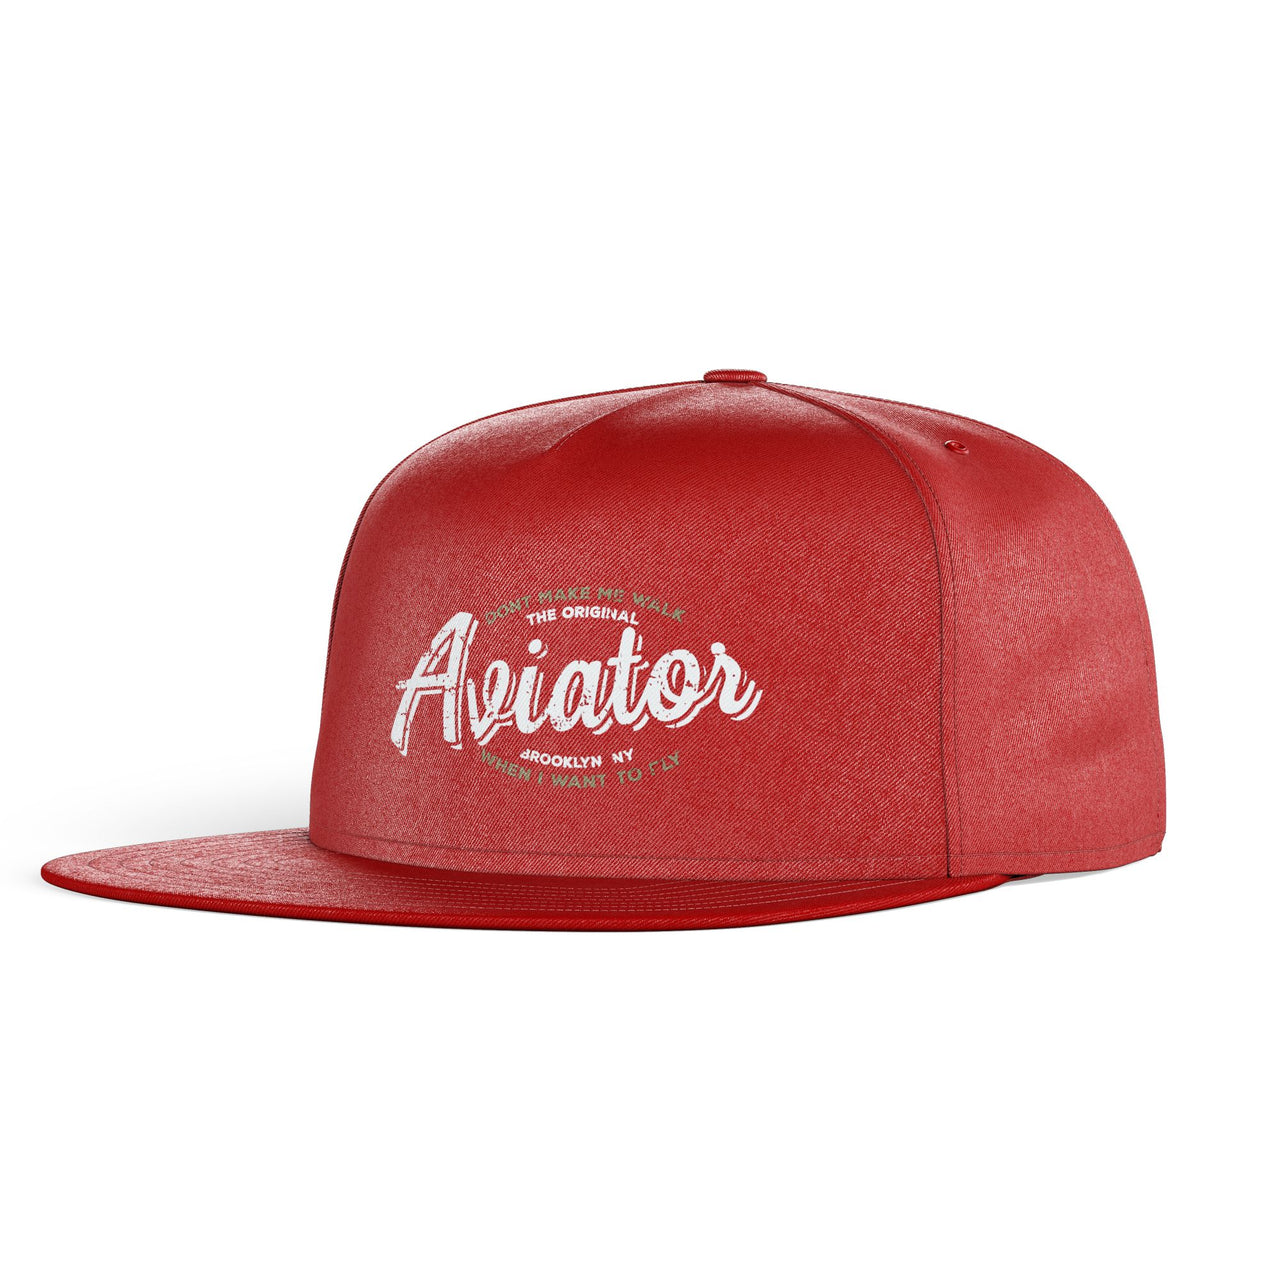 Aviator - Dont Make Me Walk Designed Snapback Caps & Hats